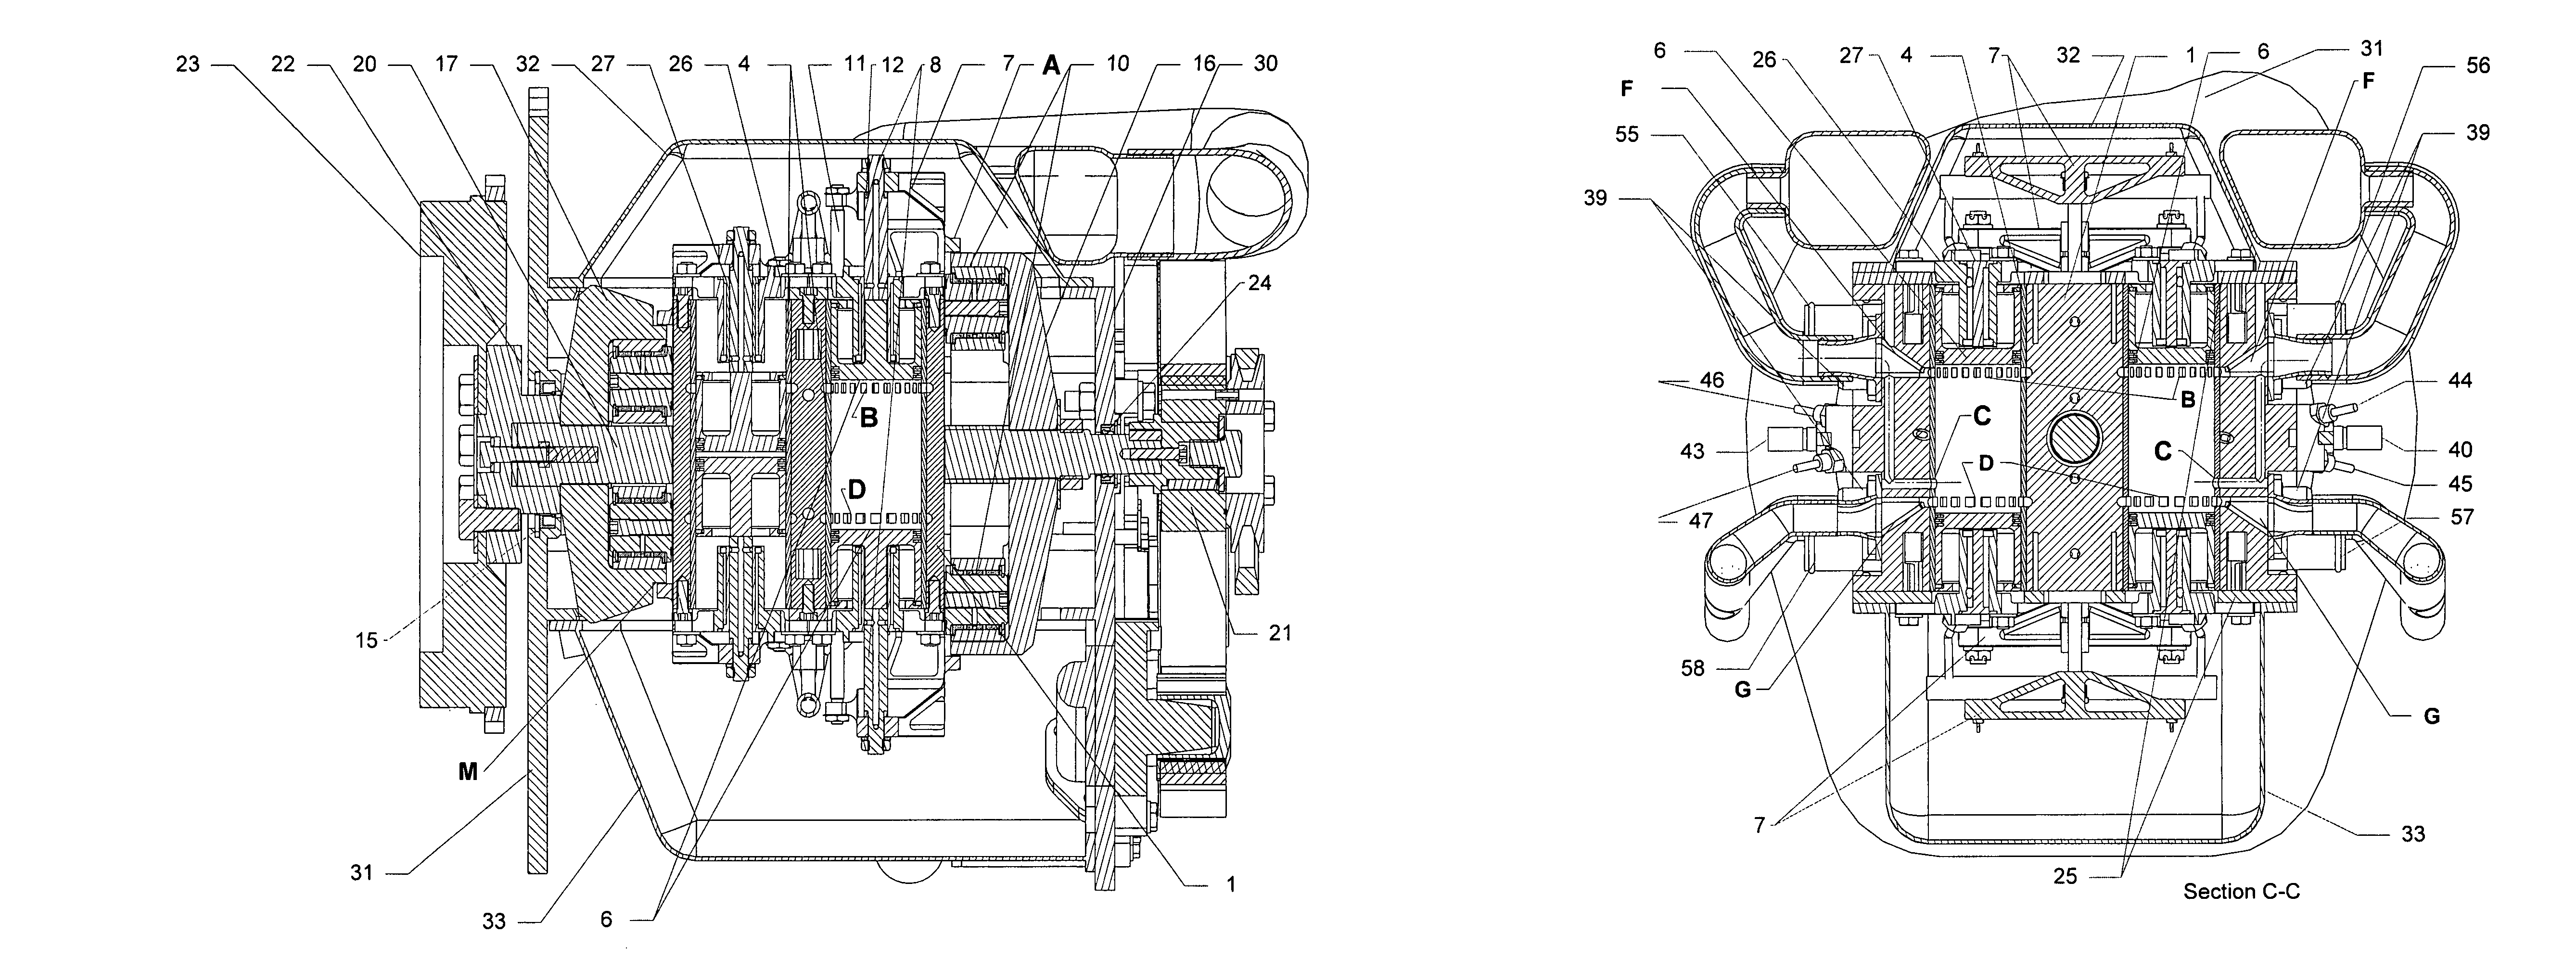 Opposite radial rotary-piston engine of Choronski